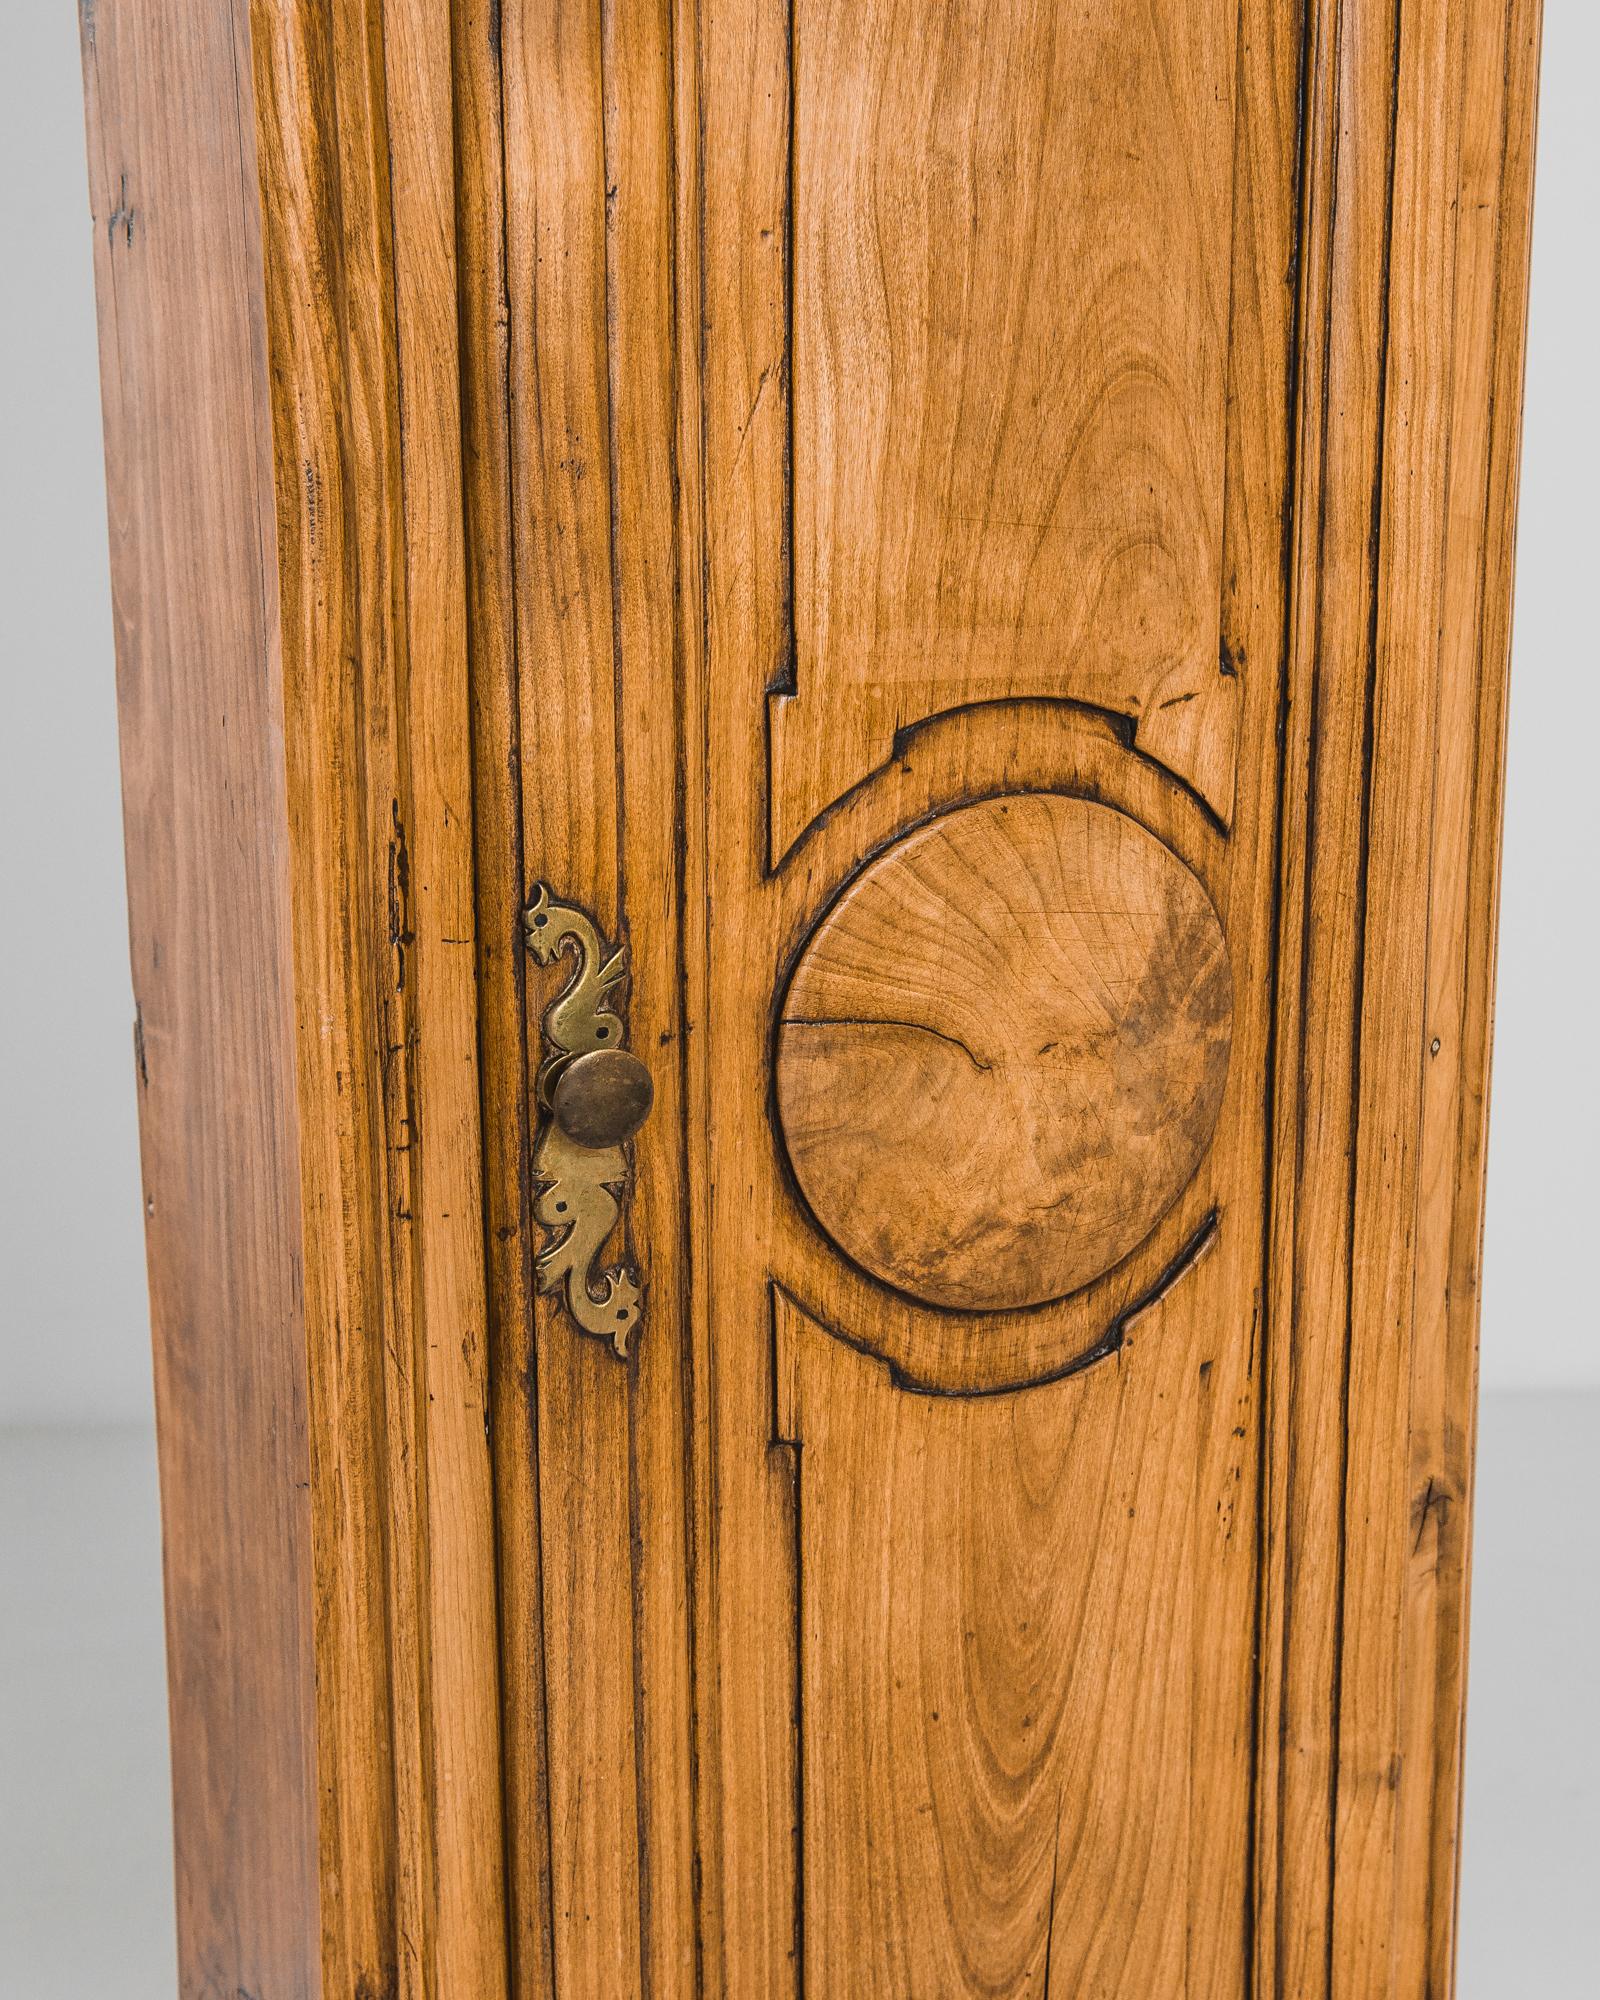 19th Century 1820s French Wooden Floor Clock